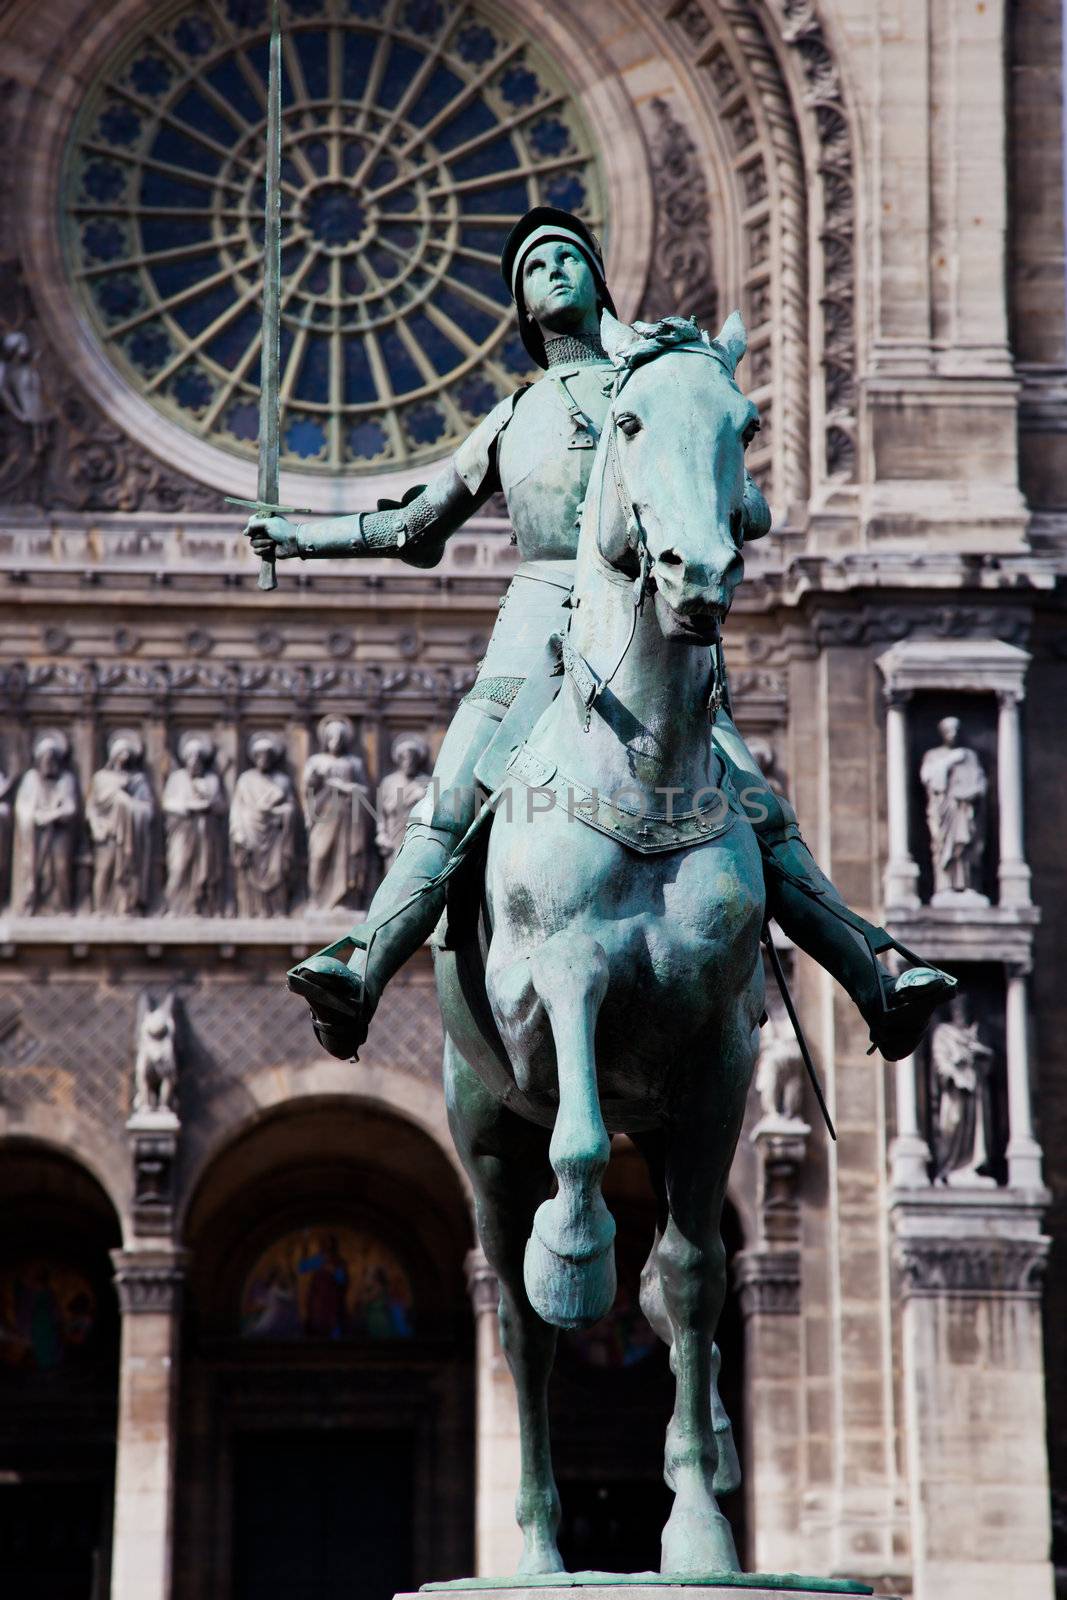 Jeanne d'Arc statue, Paris France. Saint Augustin church in the background